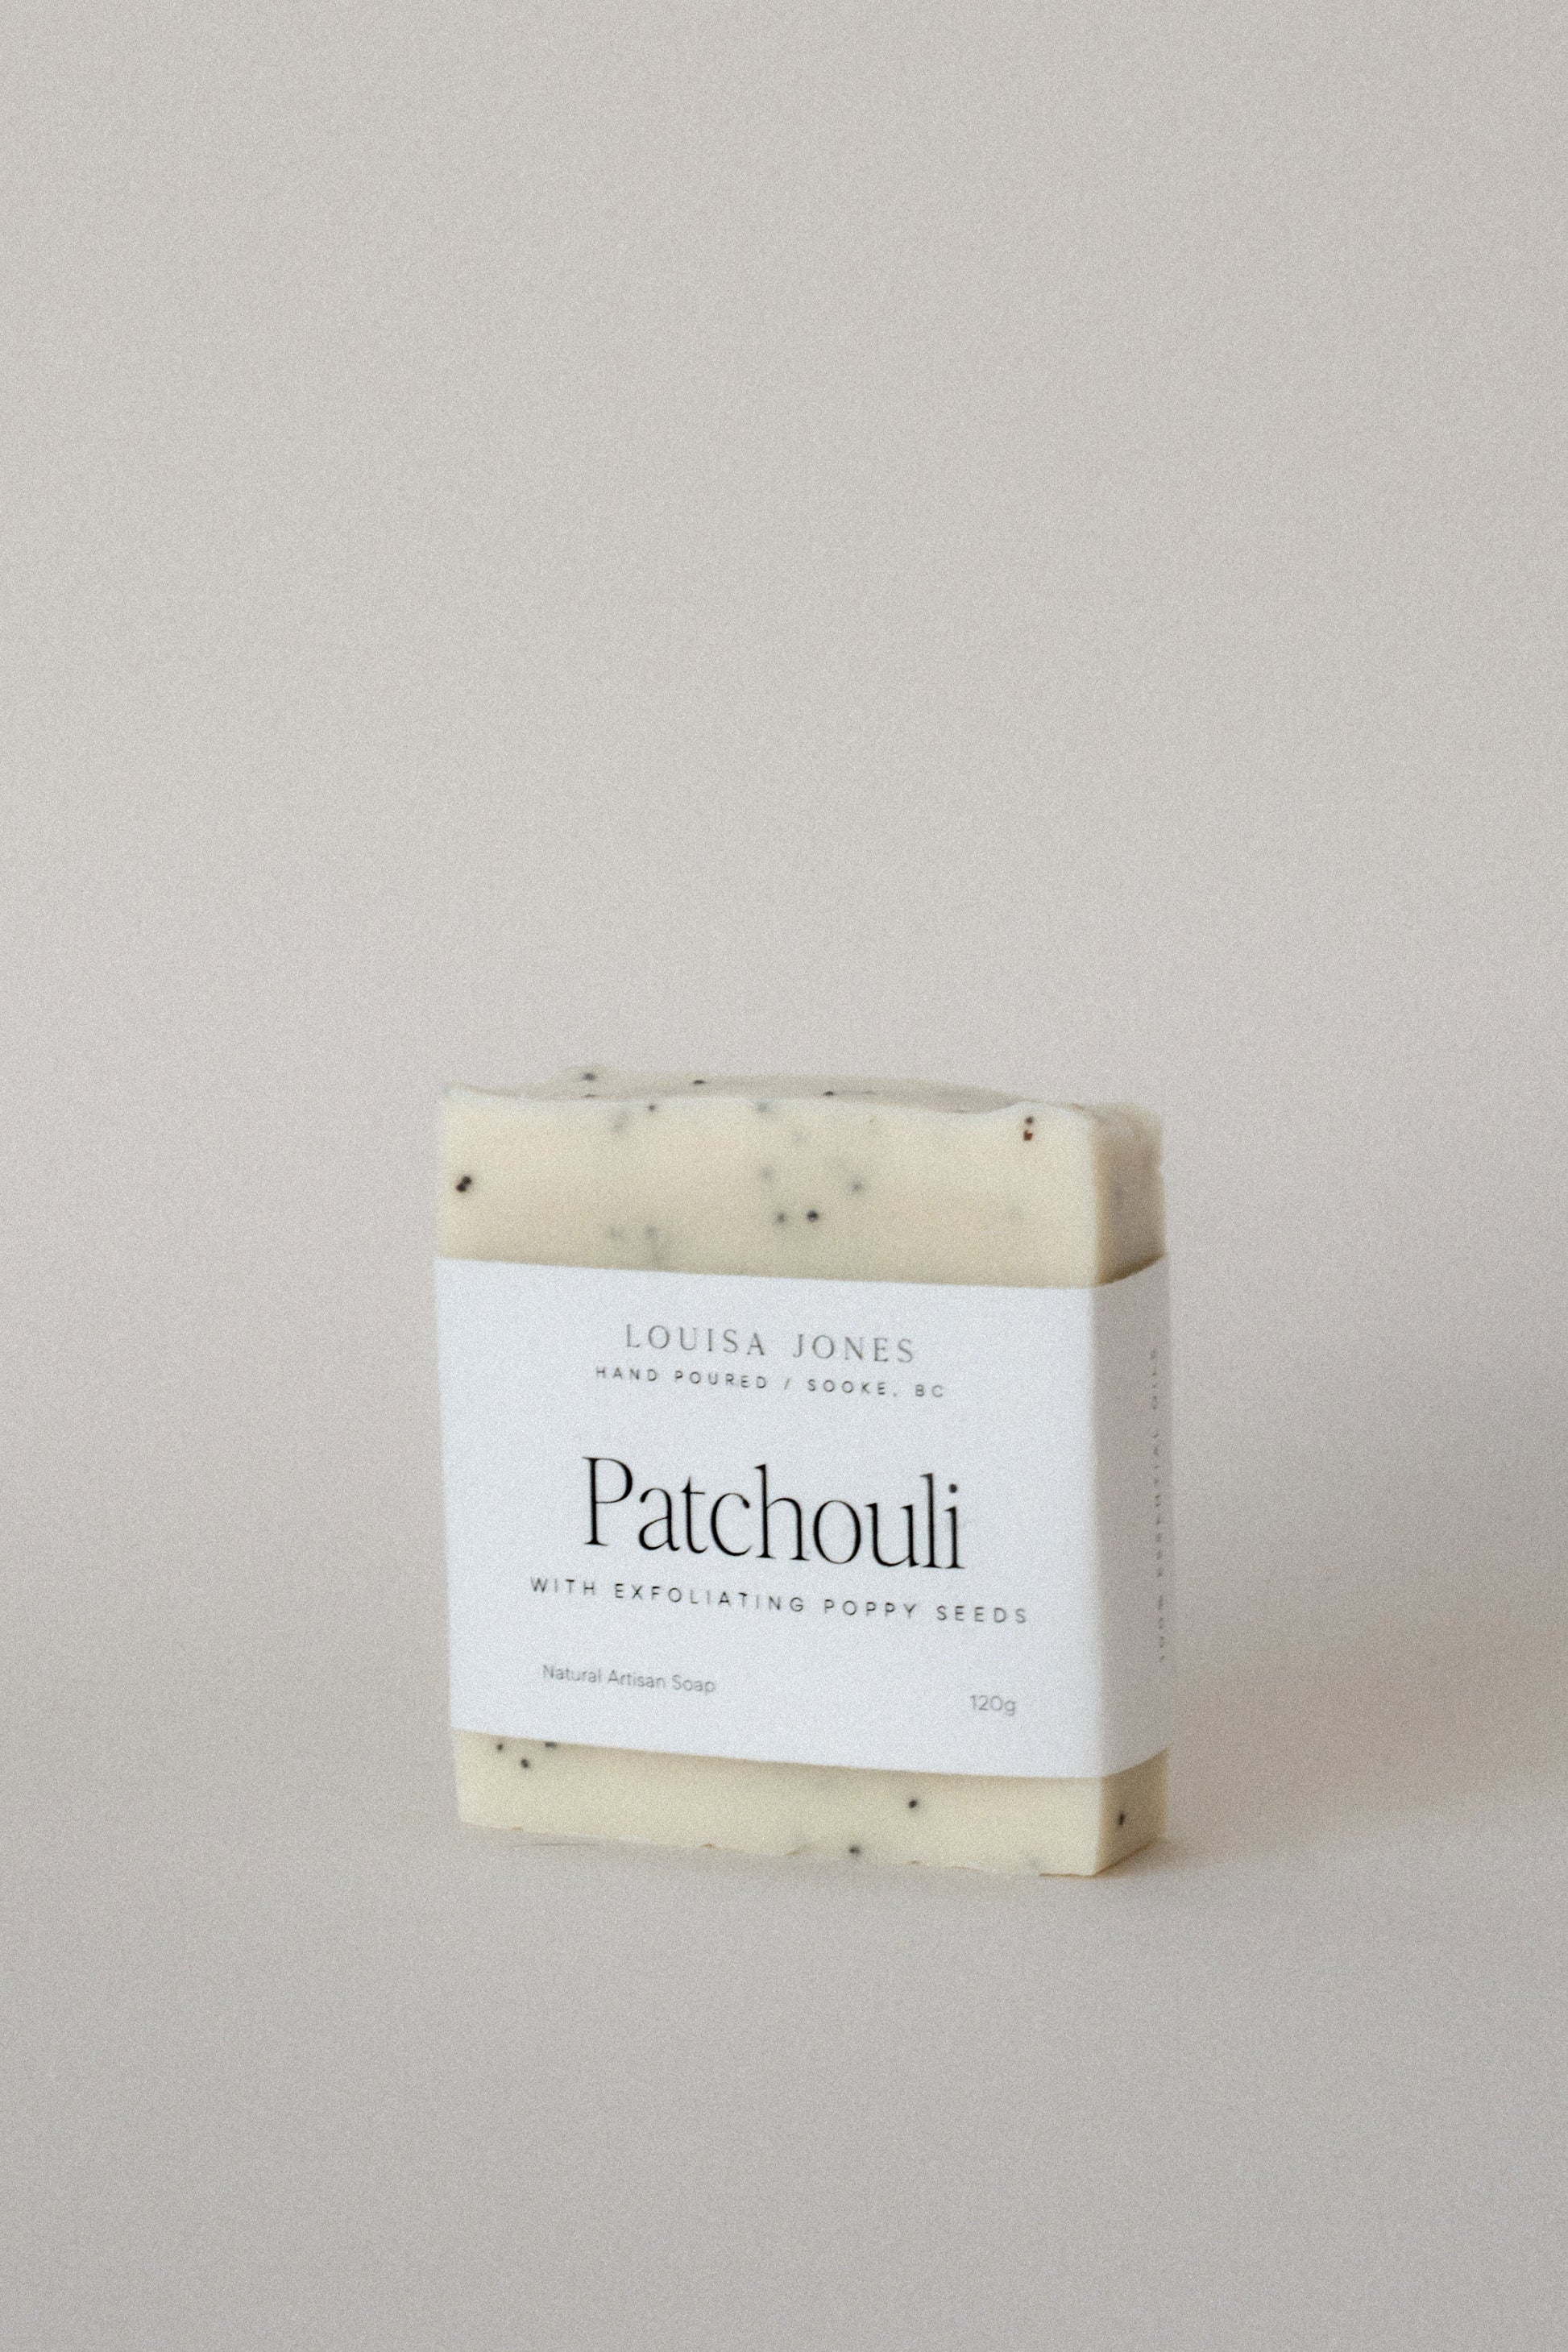 Patchouli with Poppy Seeds Natural Soap - LouisaJonesco